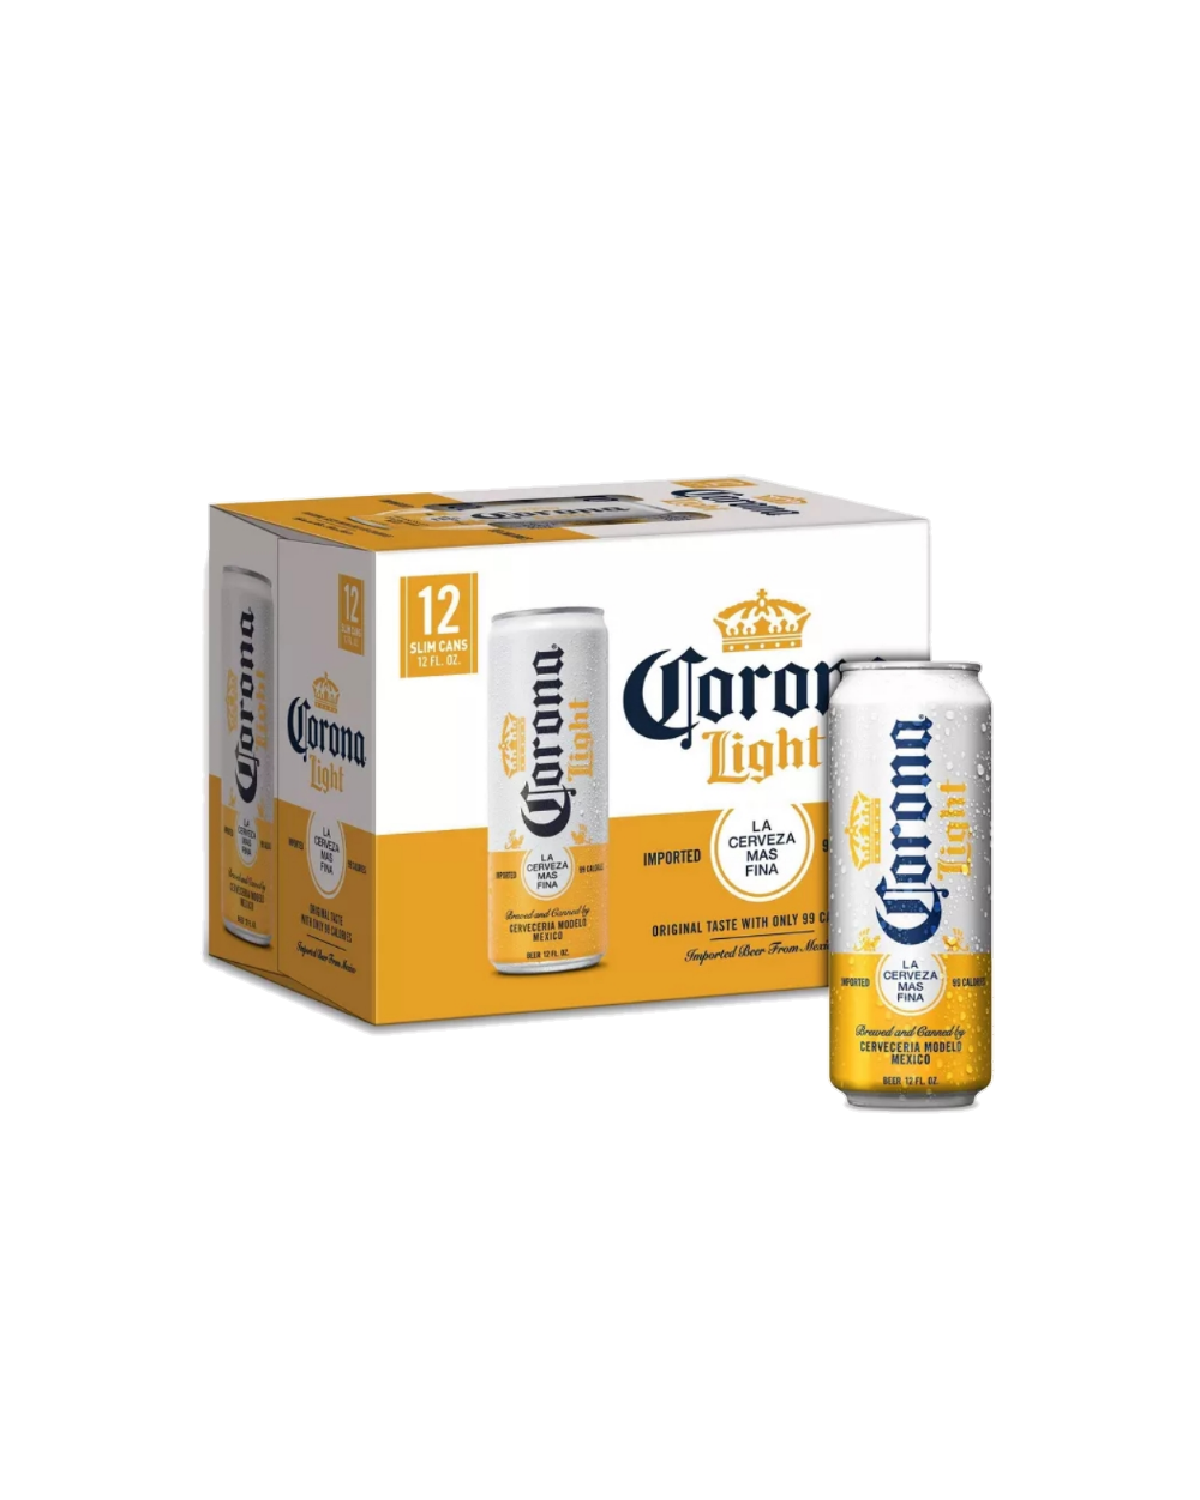 Corona Light 12 cans 12 Fl Oz